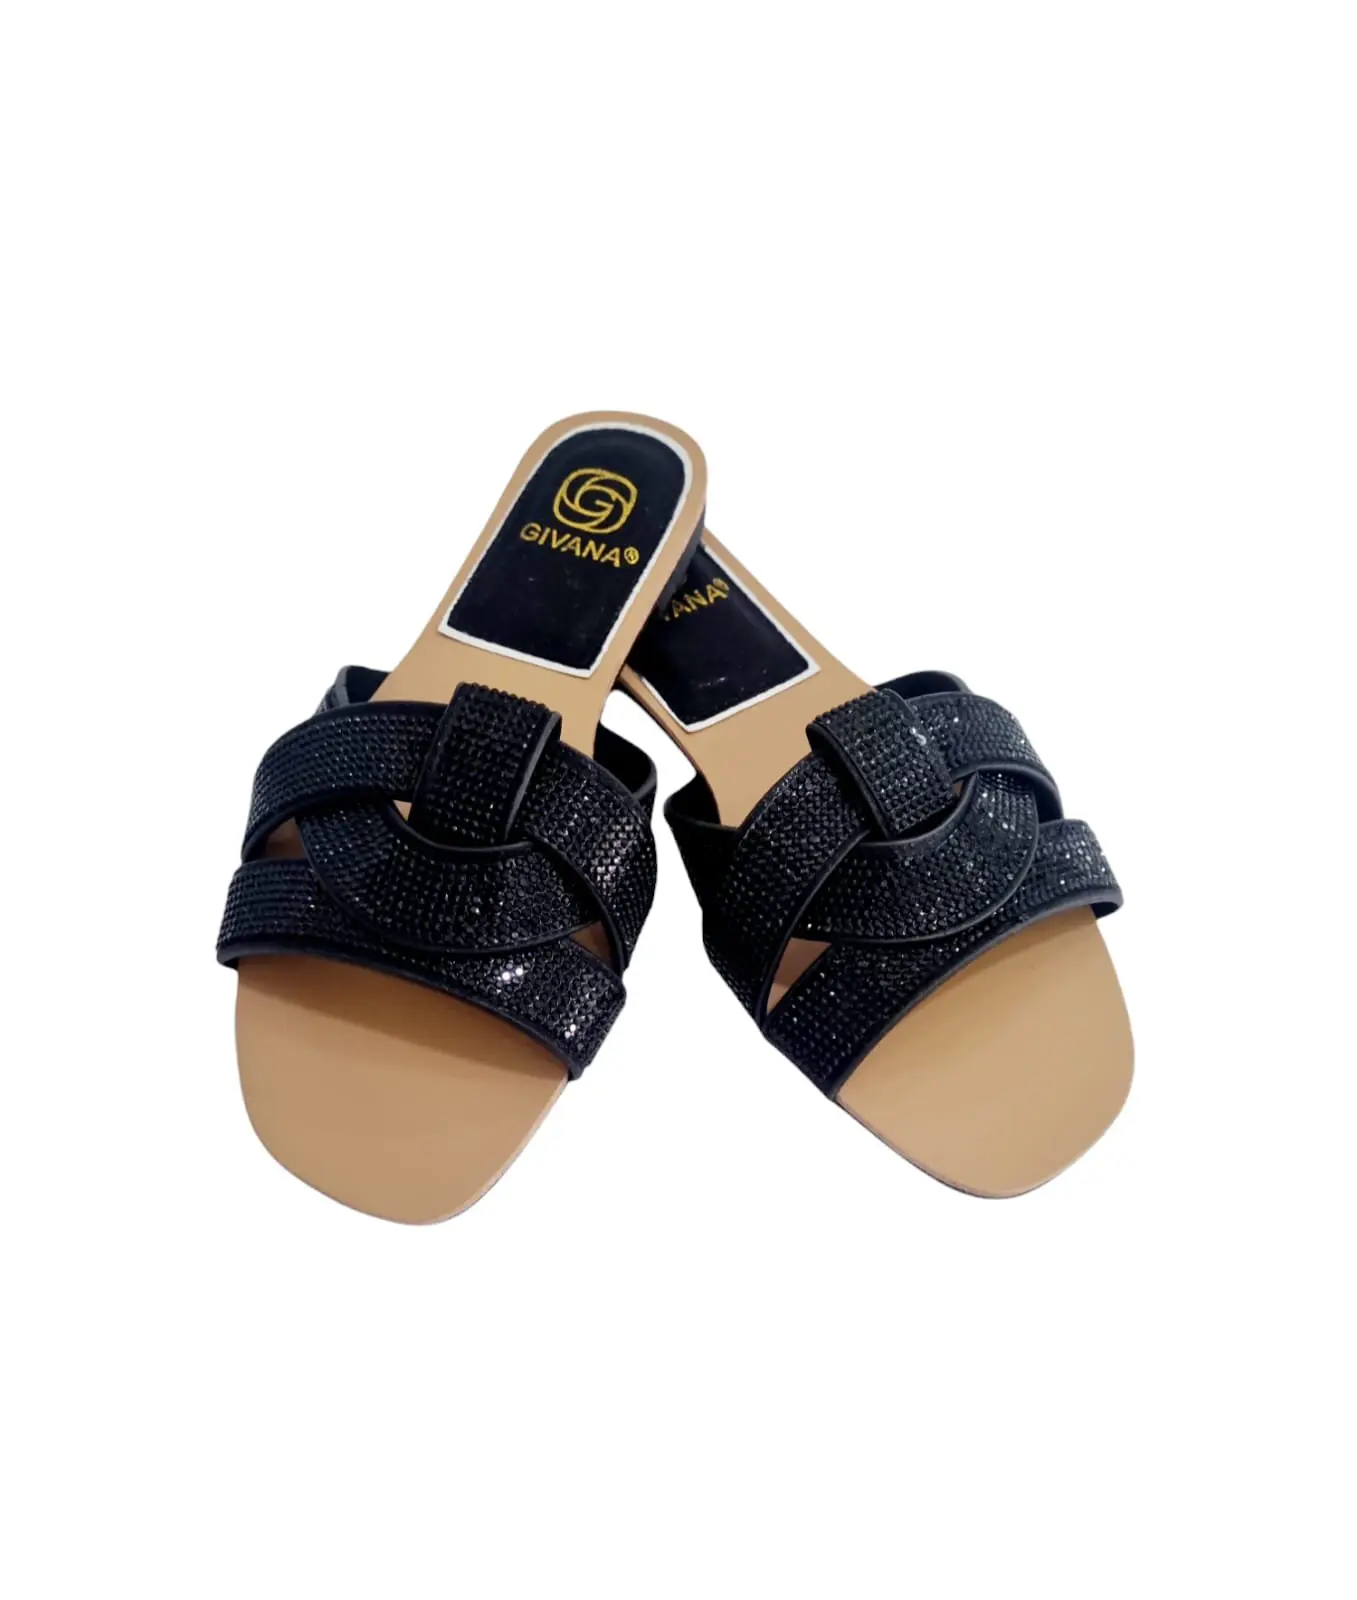 Slippers with black rhinestones, non-slip sole, 1.5cm rise.